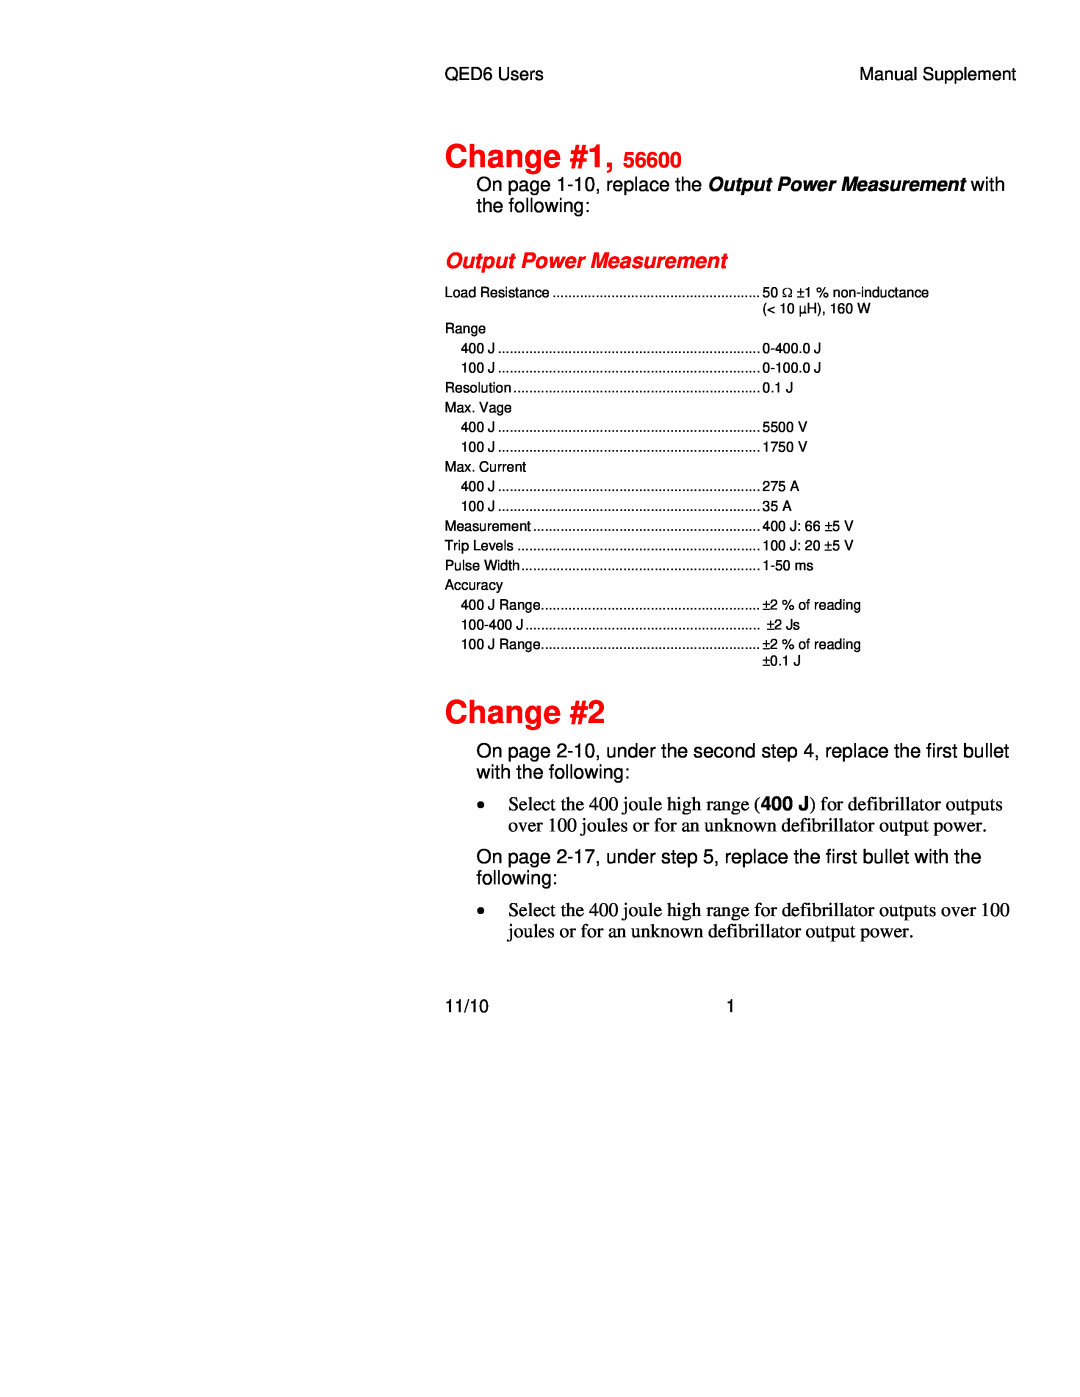 Fluke 2204520 manual Change #1, Change #2, Output Power Measurement 